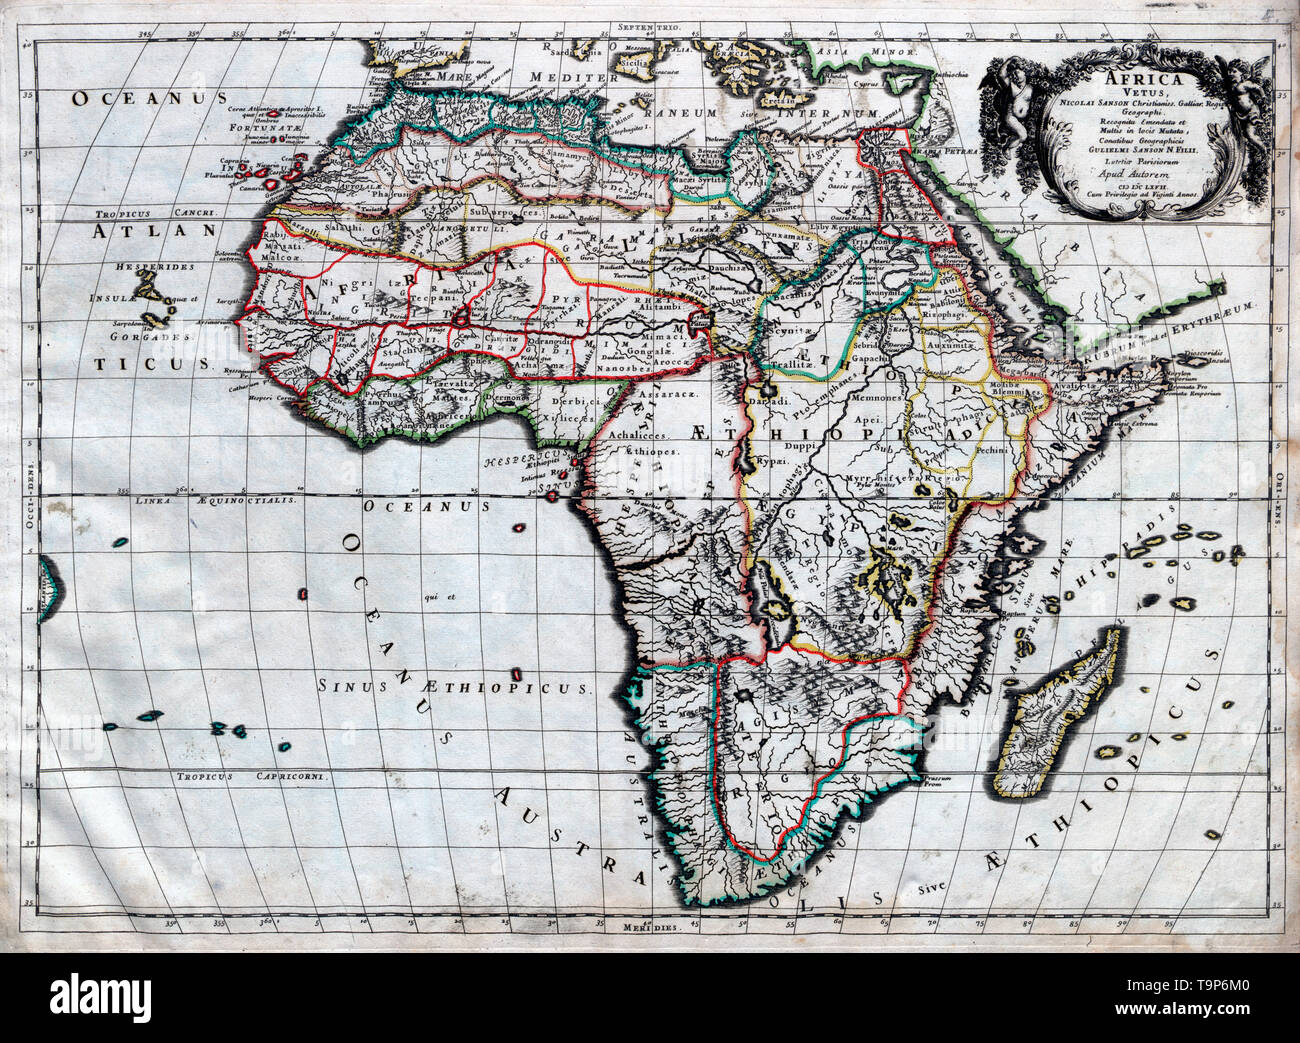 Afrika Vetus - Sanson Atlas, um 1700 Stockfoto